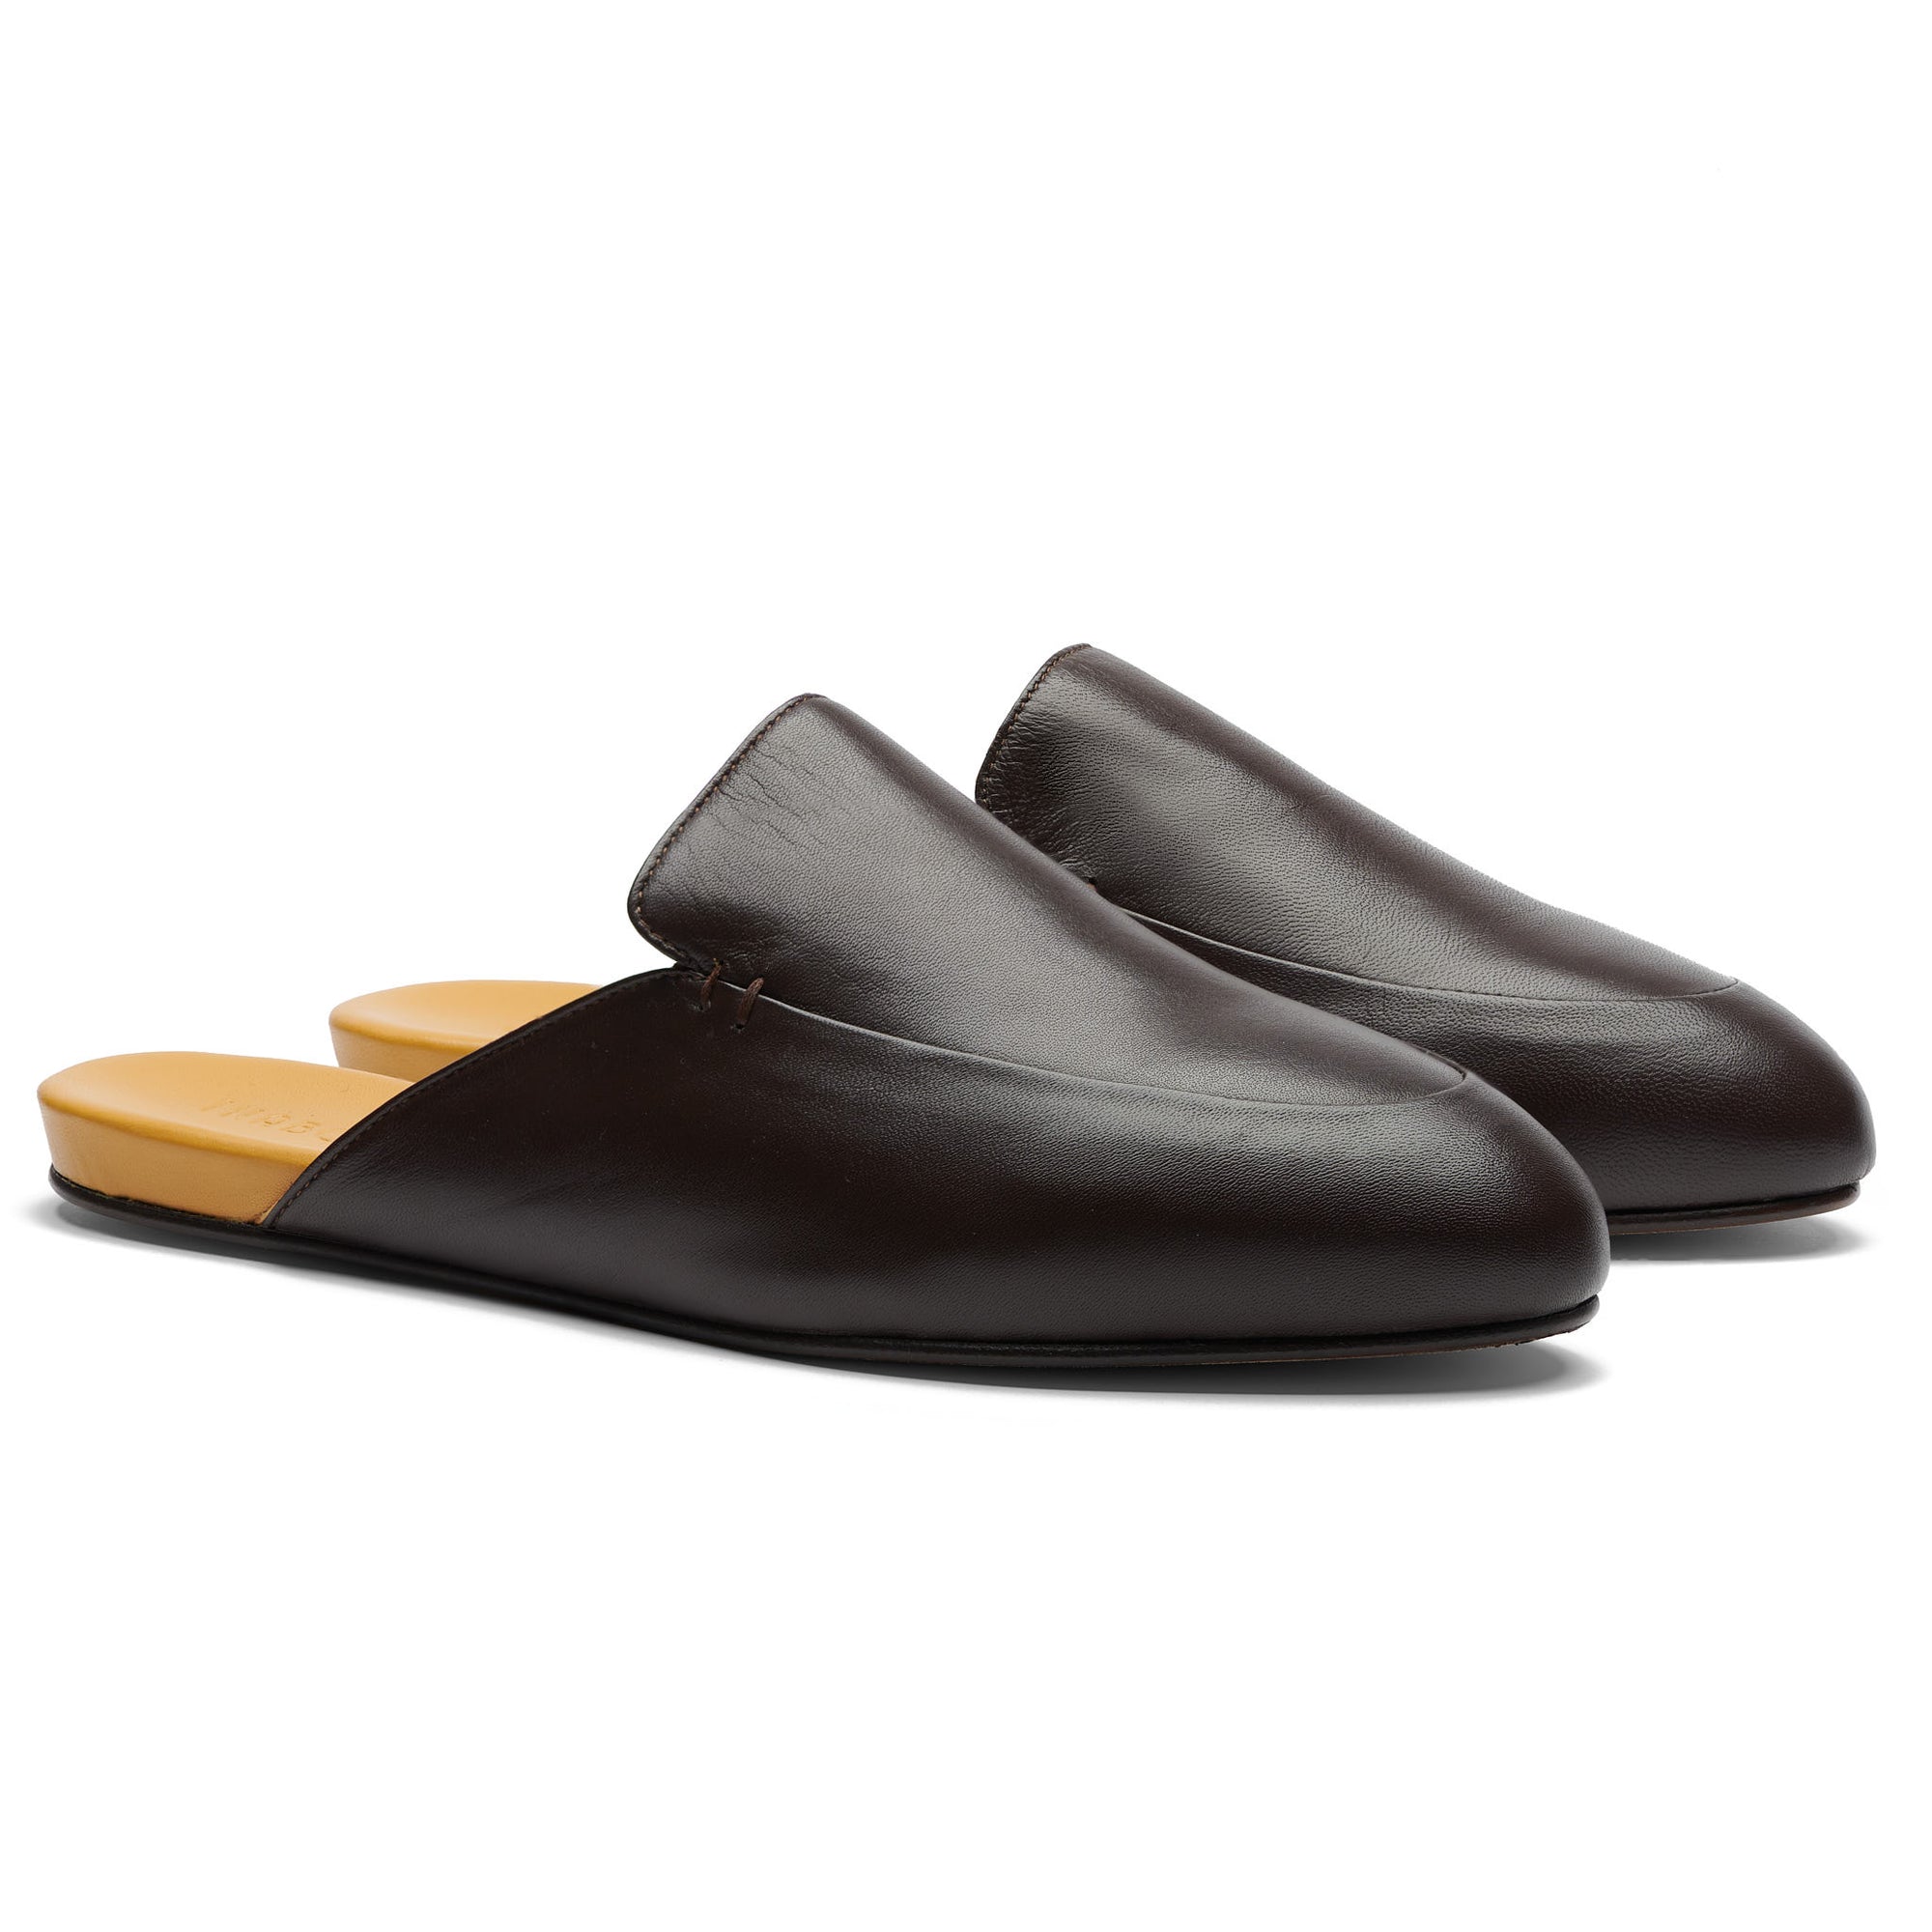 Men's Dark Brown Leather Slippers